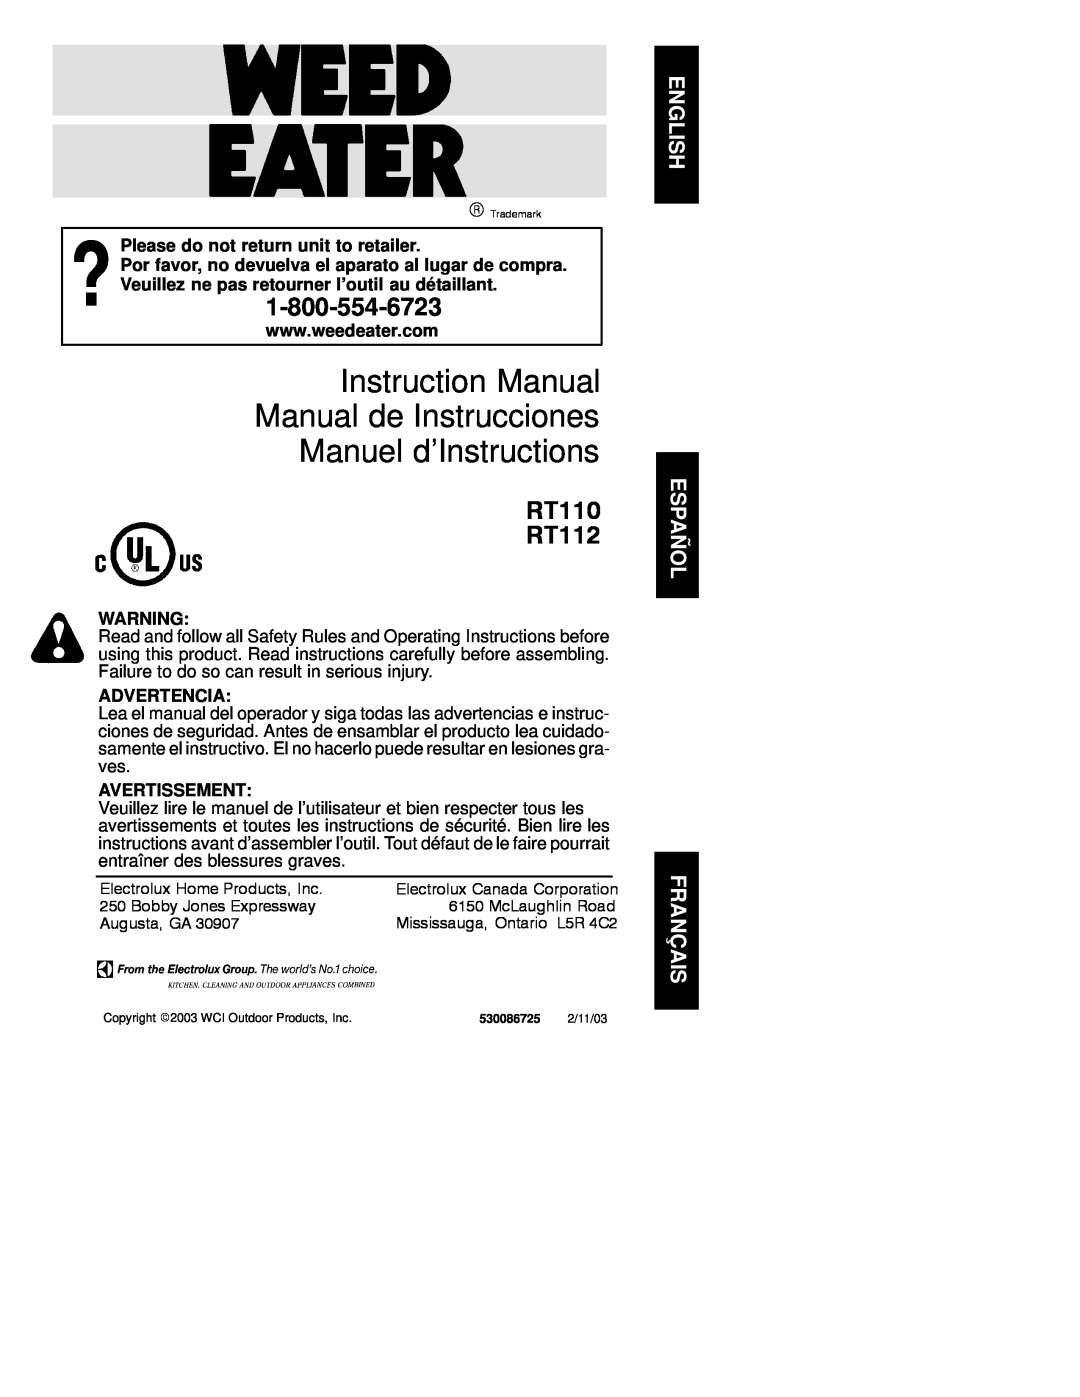 Weed Eater instruction manual Please do not return unit to retailer, Advertencia, Avertissement, RT110 RT112 